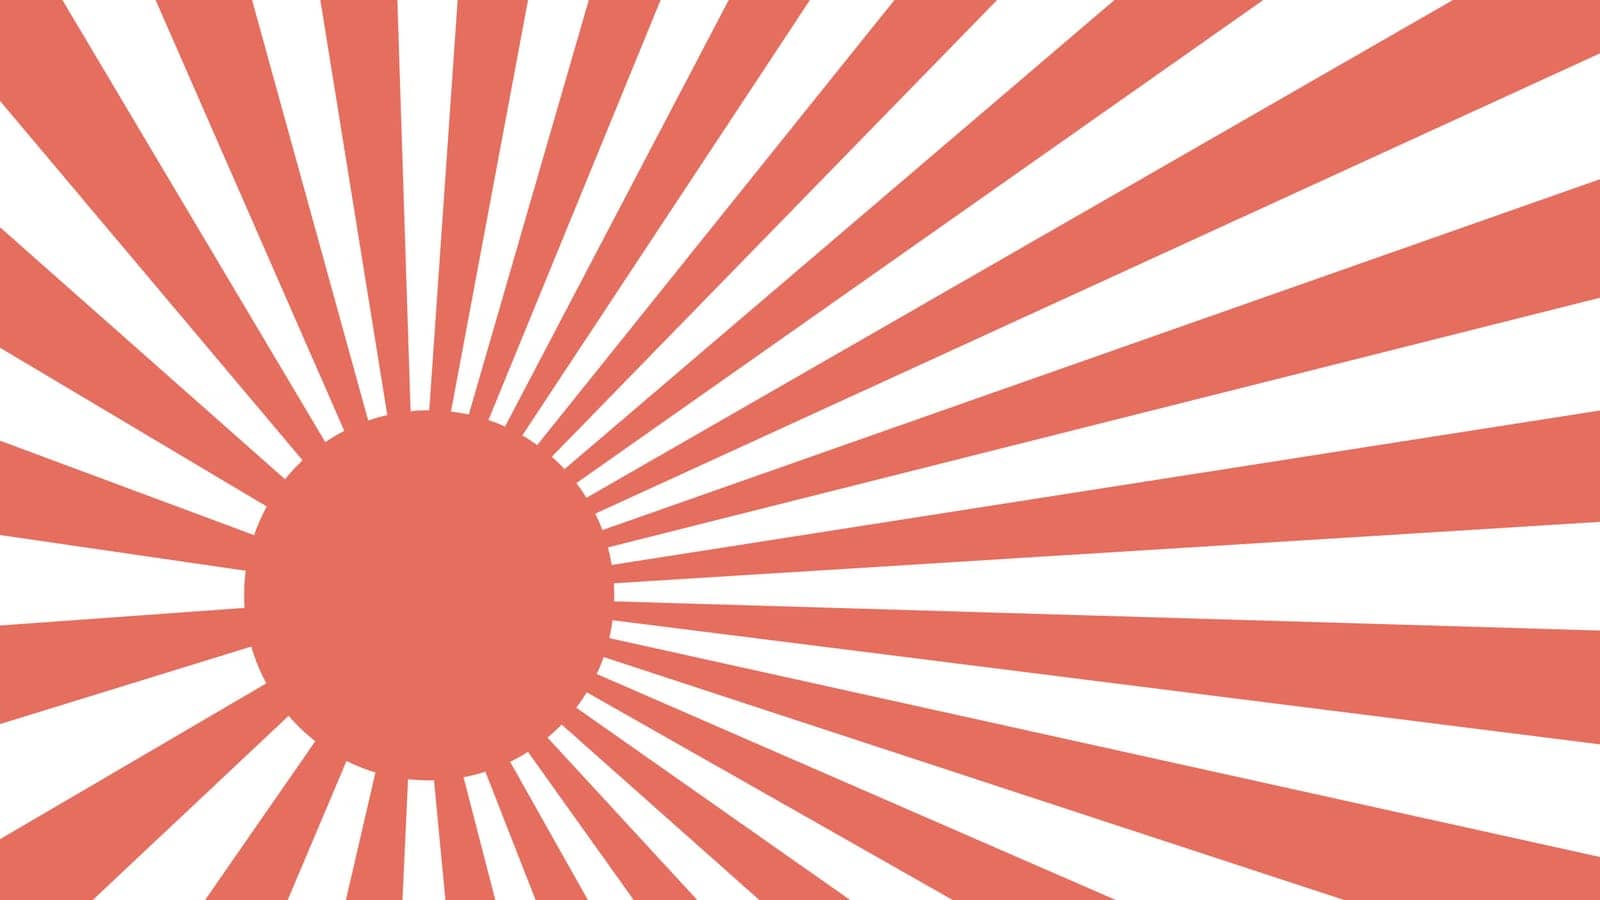 Retro background rising red sun rays, Japan sun flag rays by koksikoks